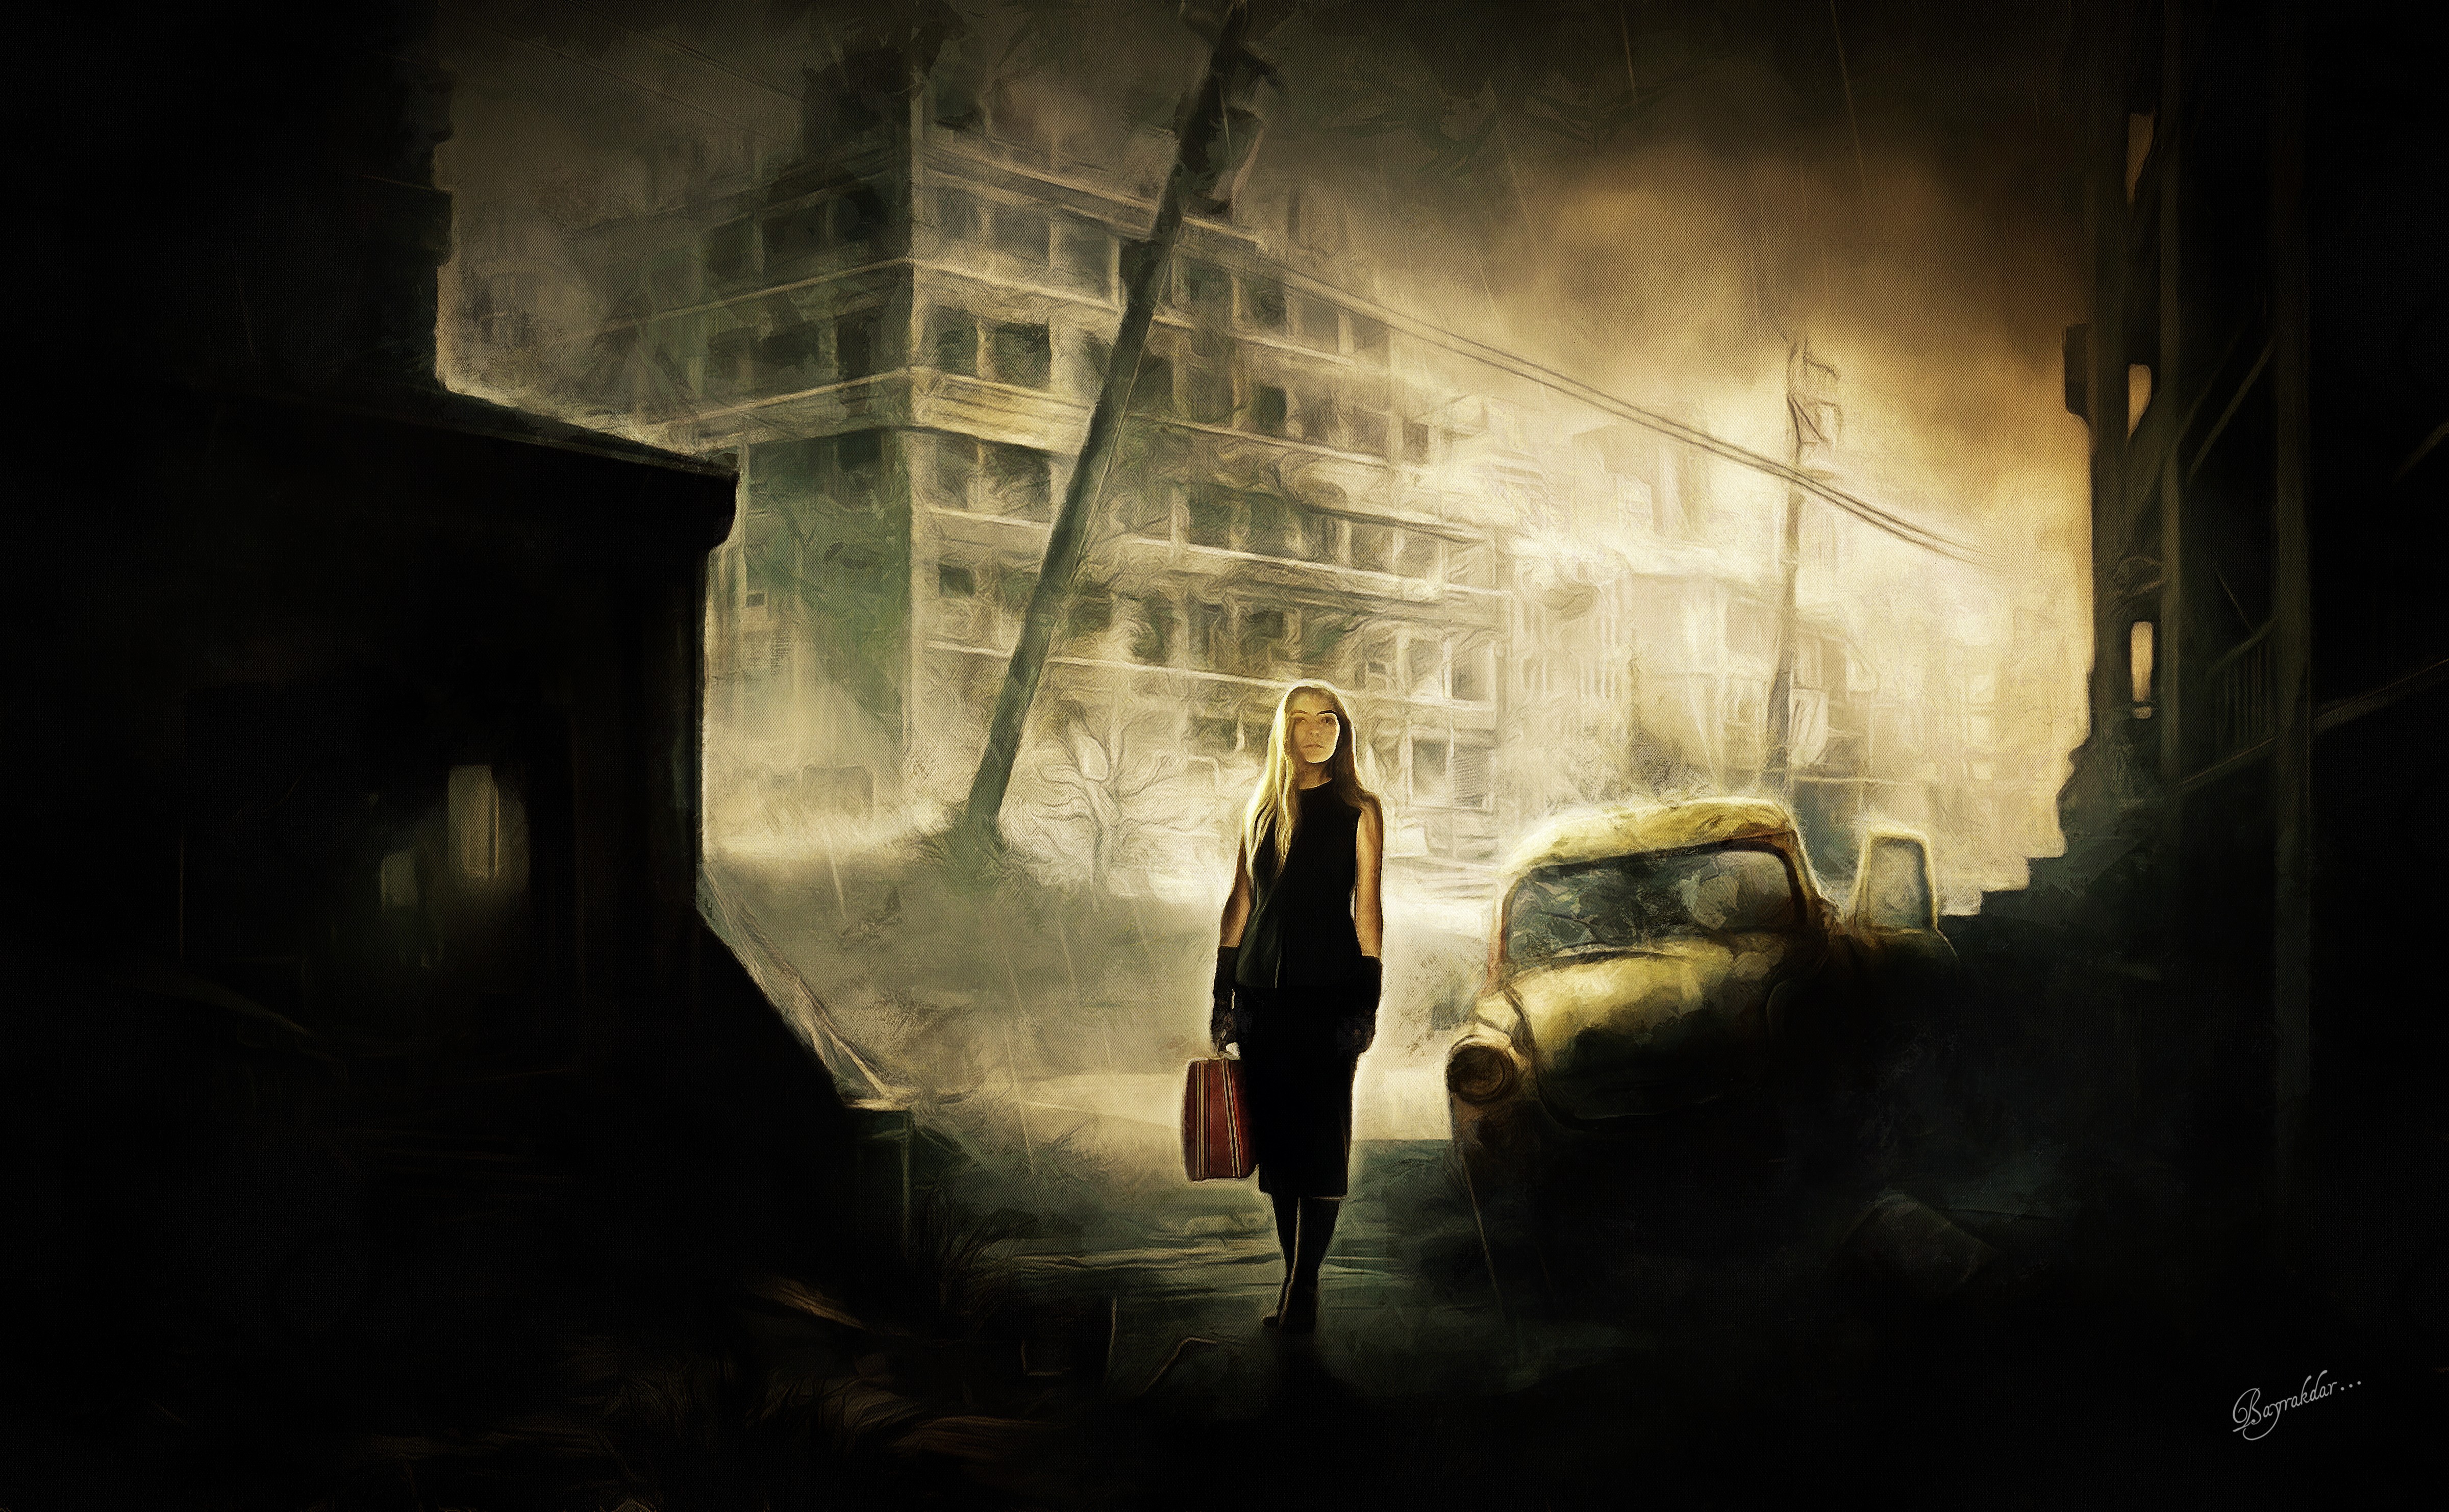 General 4800x2964 women apocalyptic artwork ruins car wreck black dress suitcase blonde